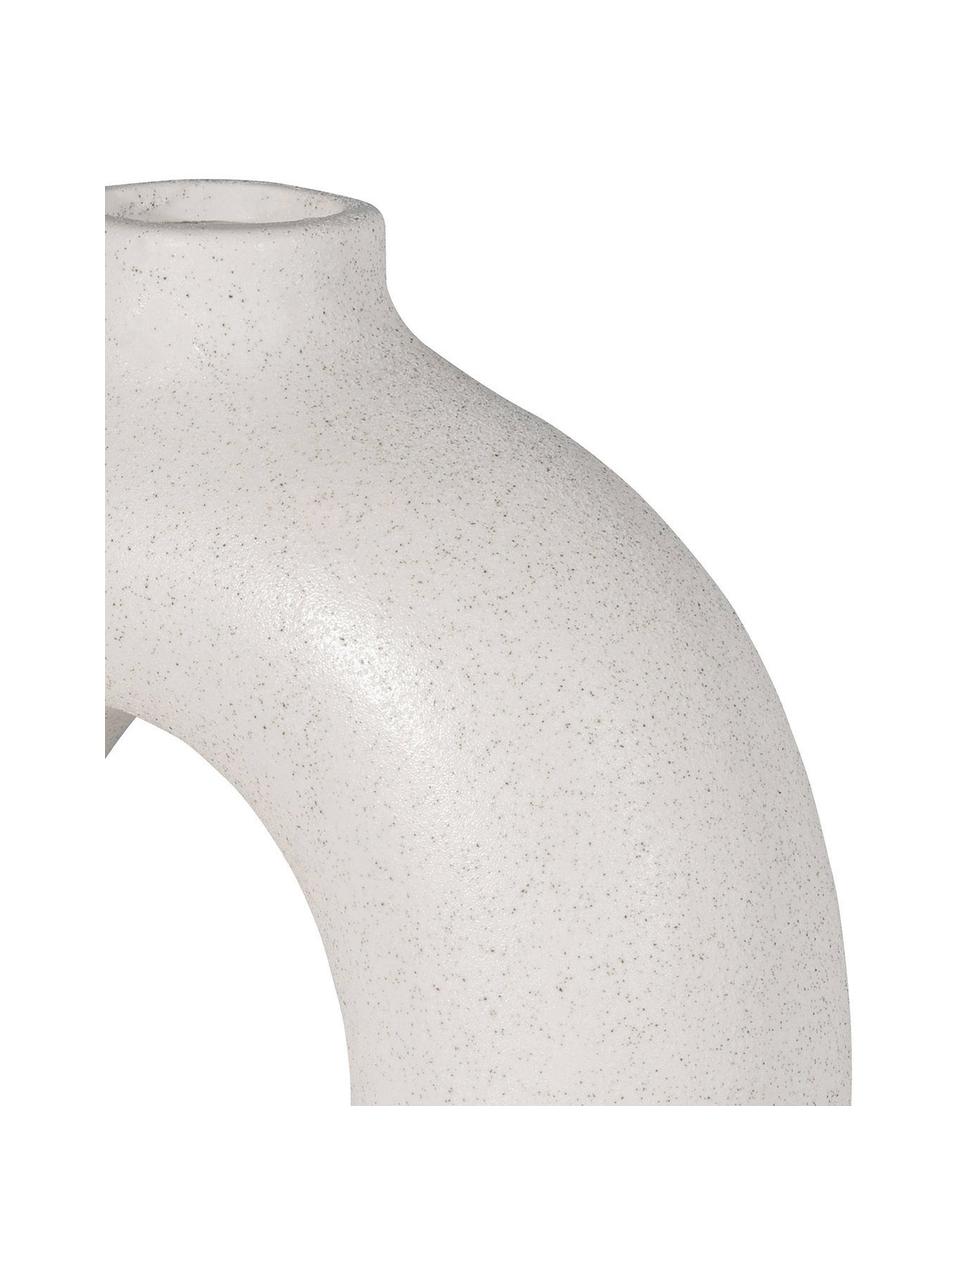 Keramik-Vase Rayan in Weiss, Keramik, Weiss, B 24 x H 25 cm